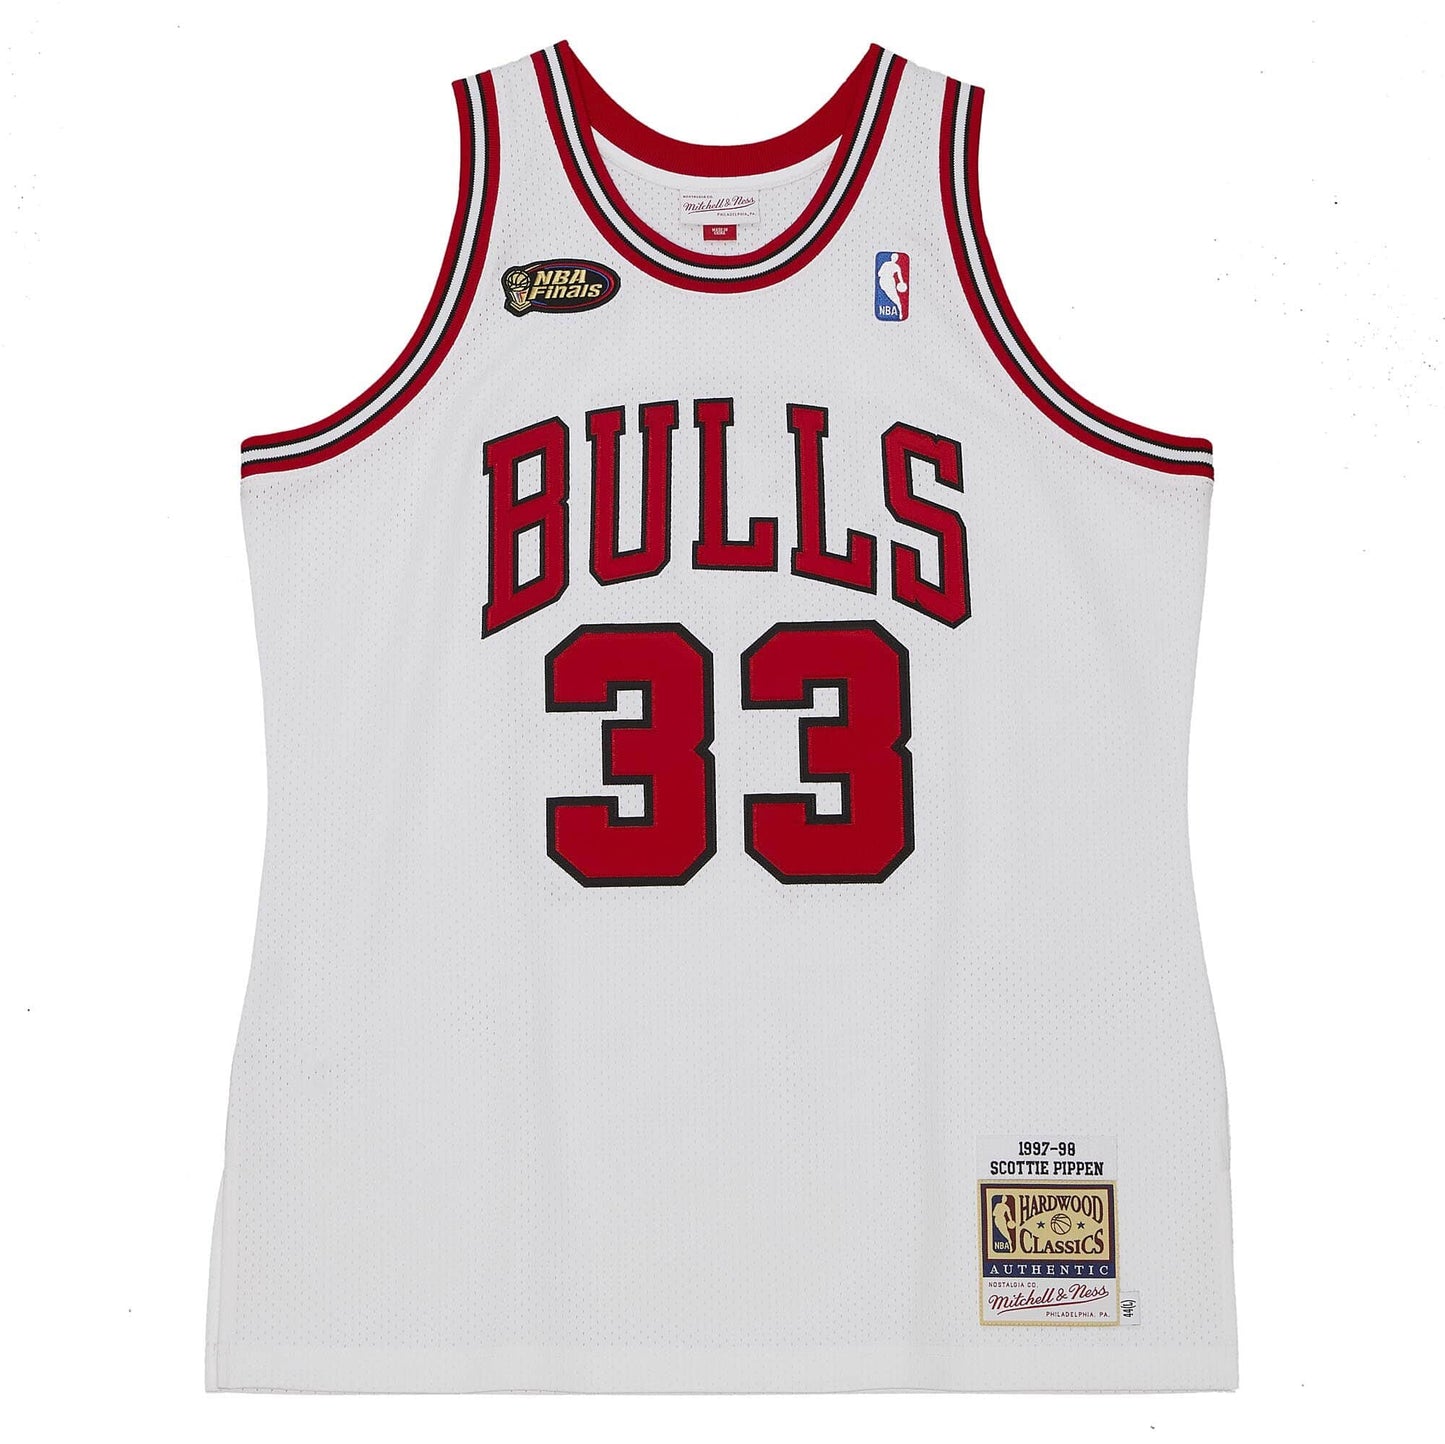 Authentic Scottie Pippen Chicago Bulls Finals 1997-98 Jersey